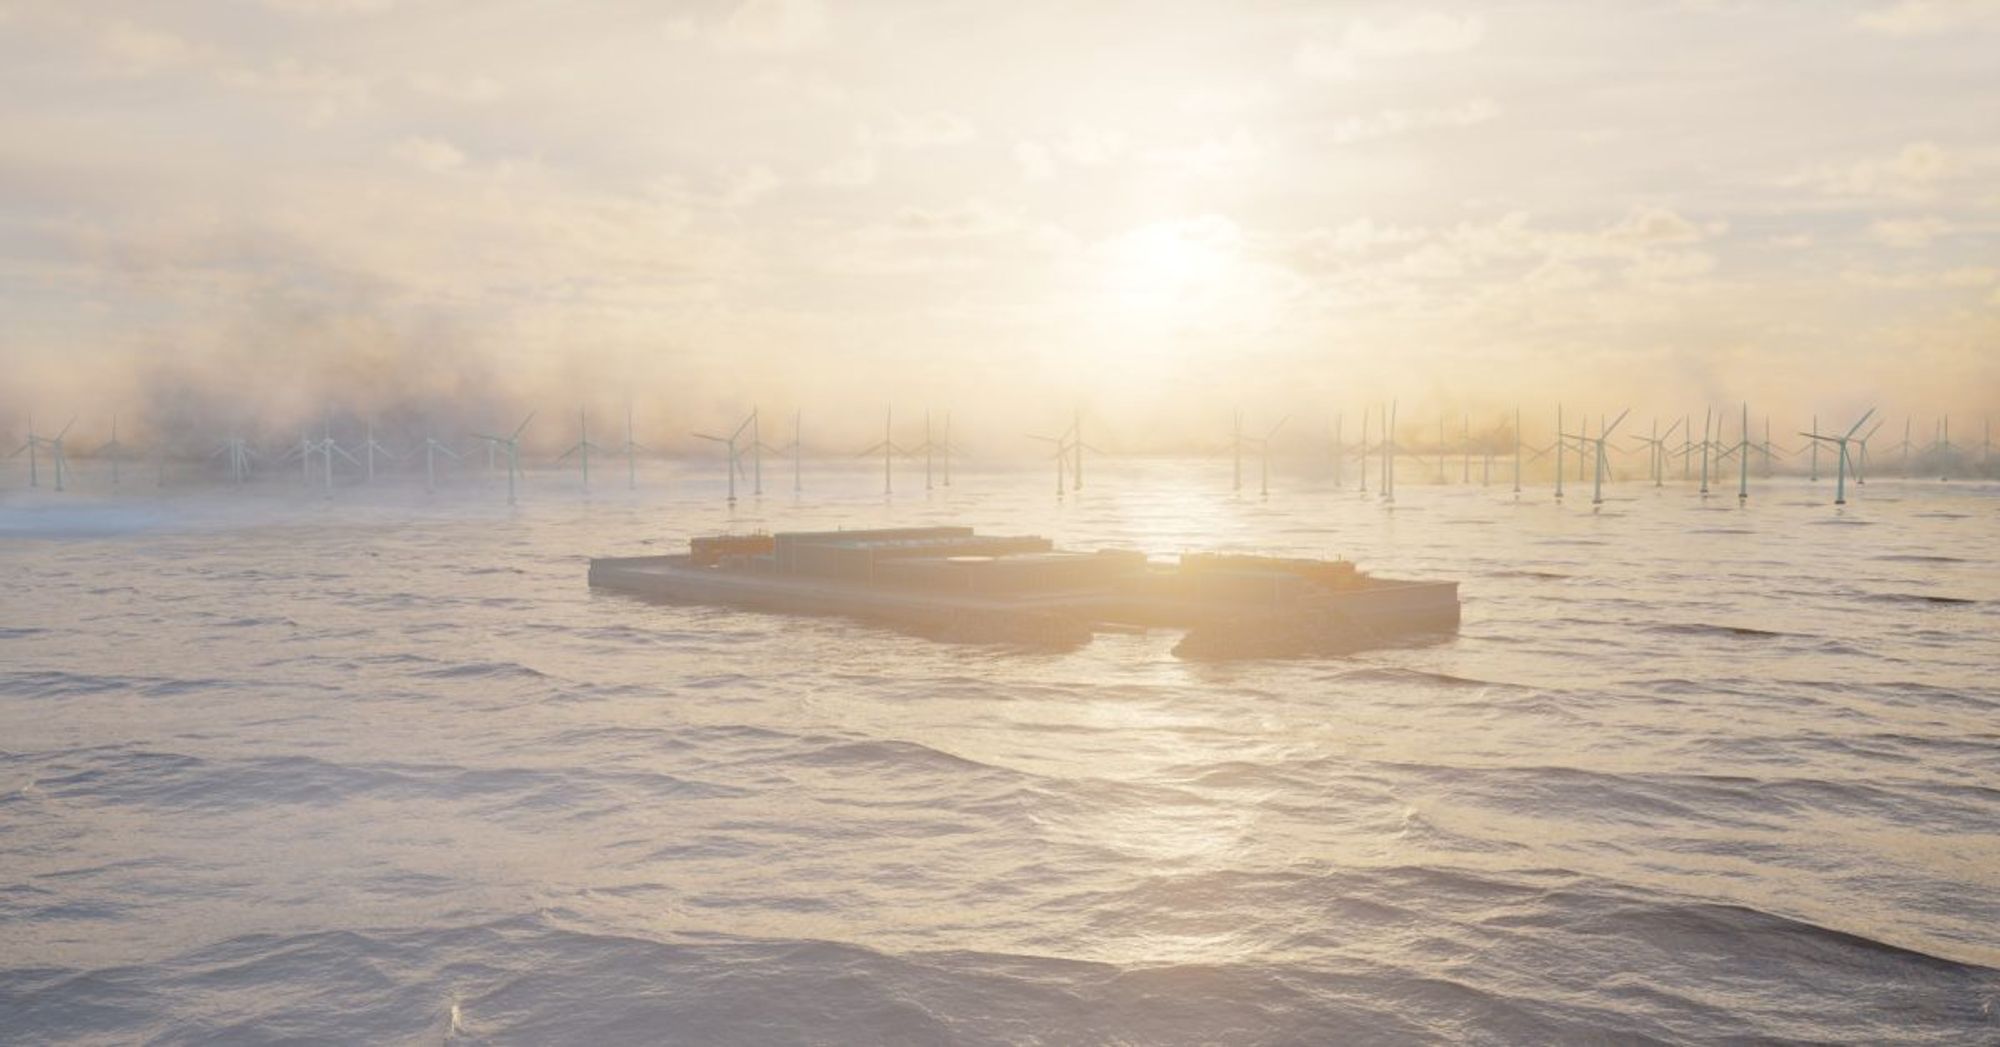 Meet the world’s first artificial energy island